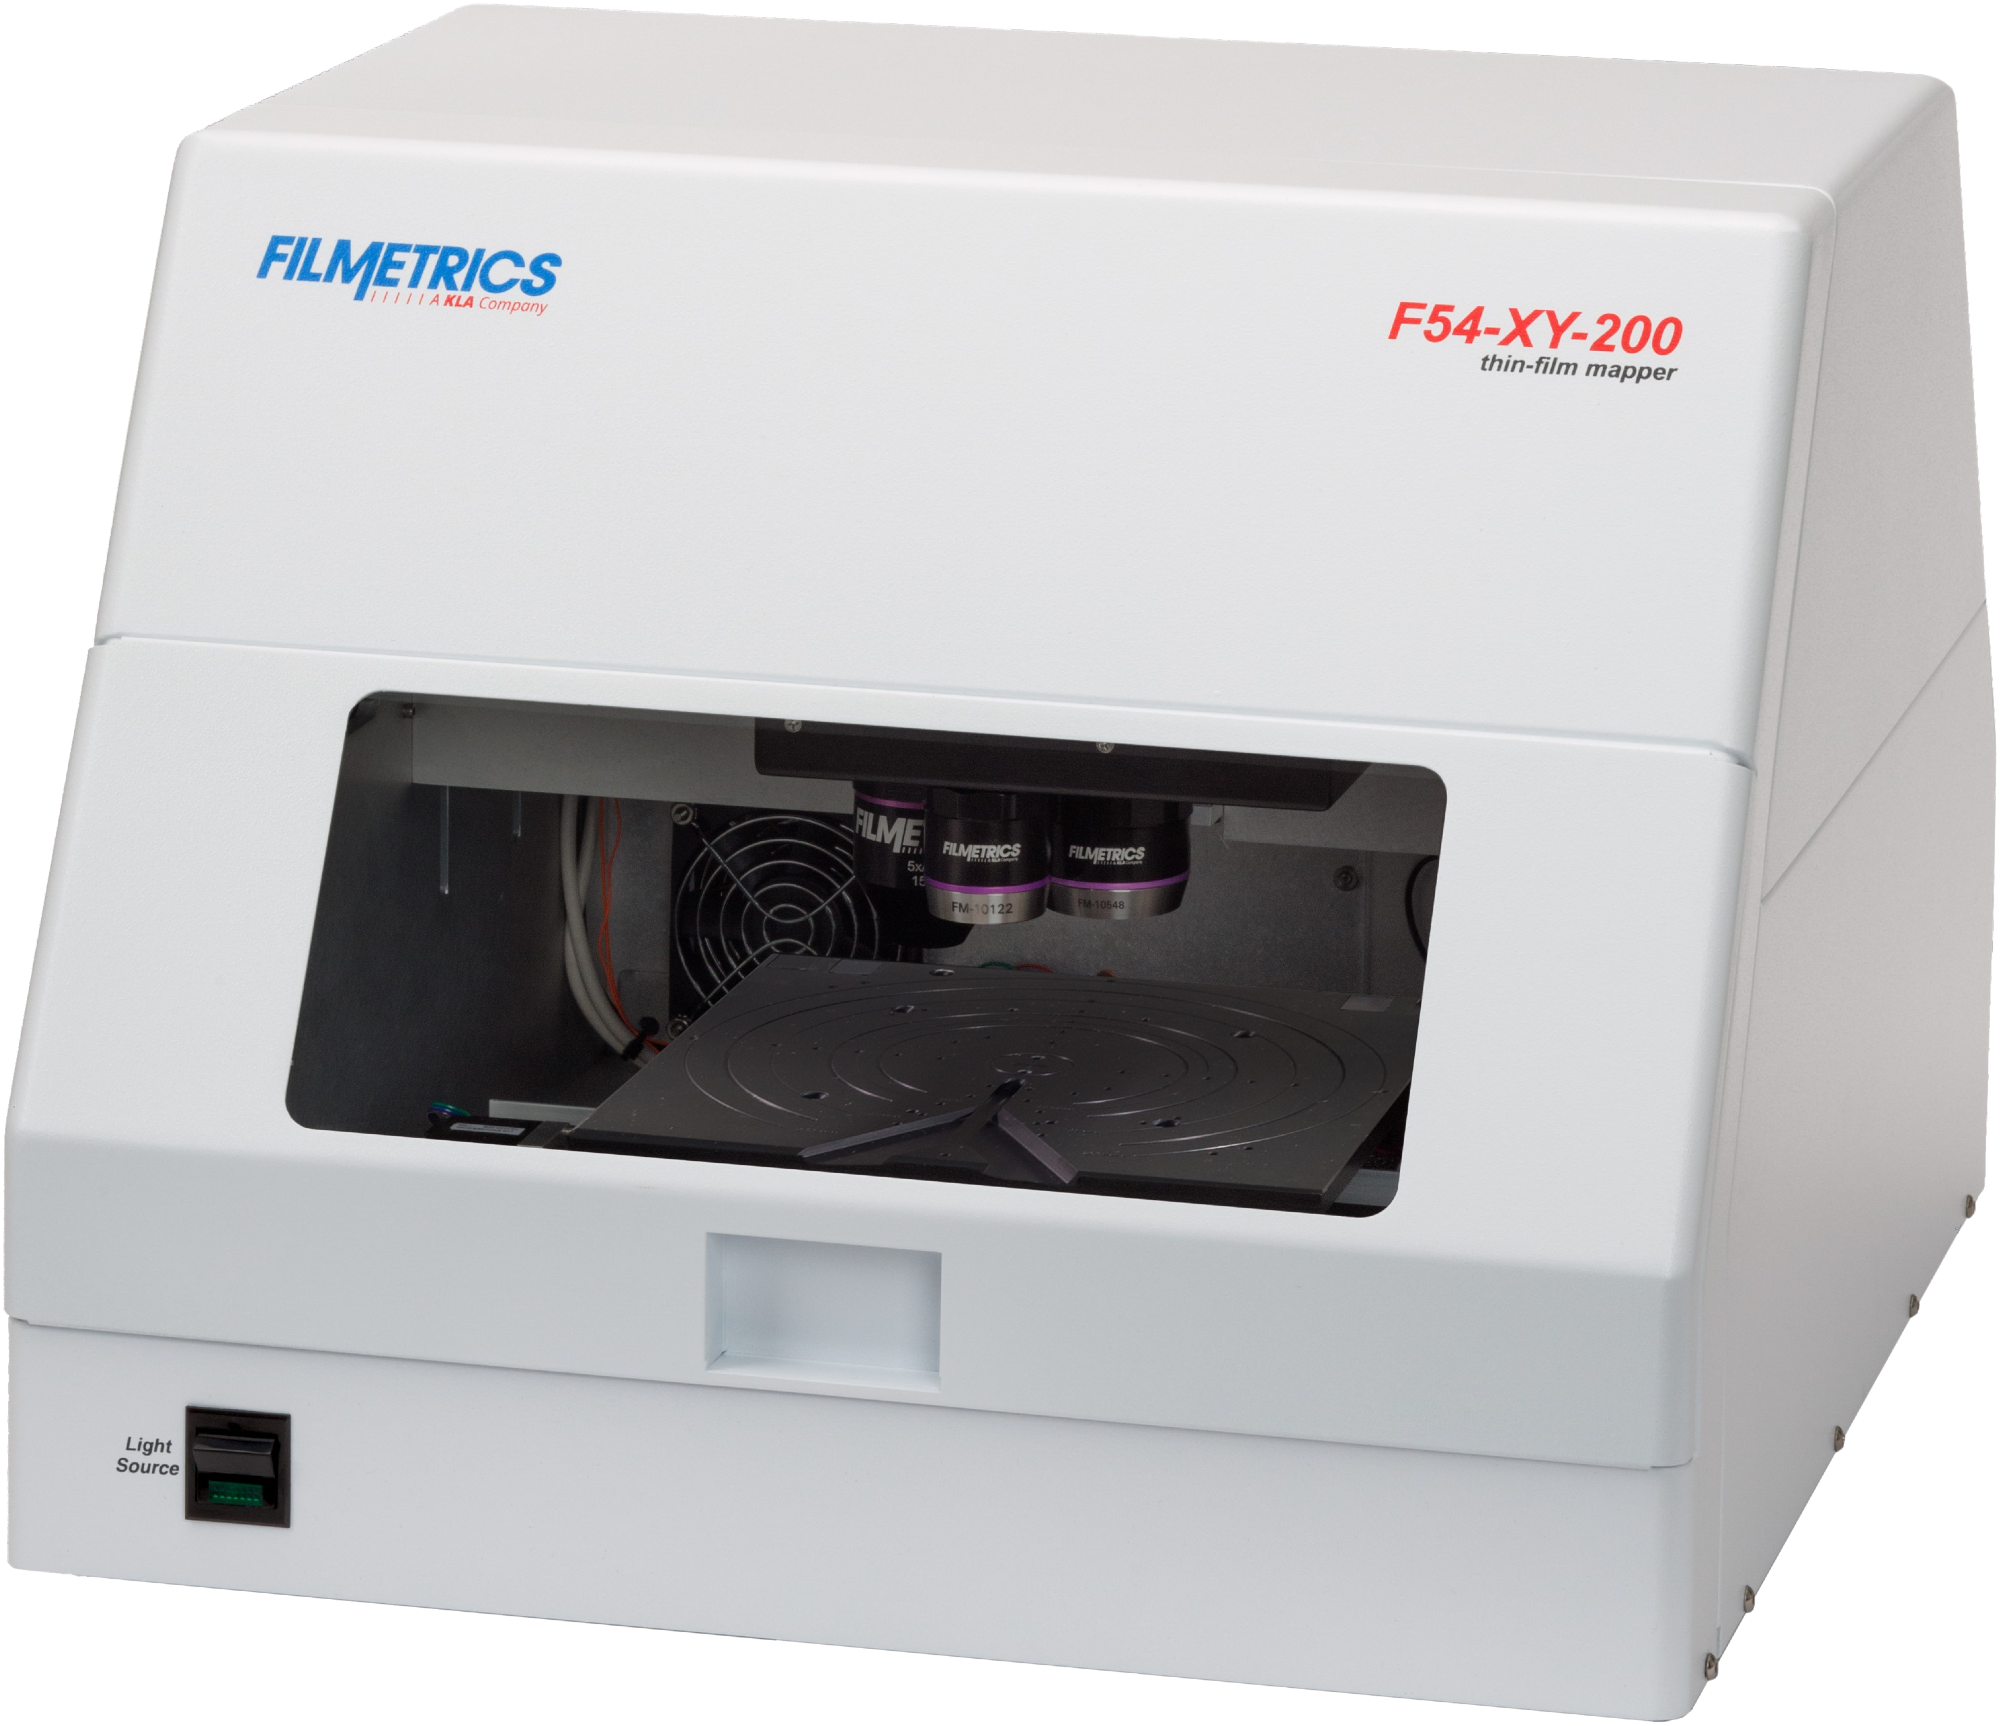 The Filmetrics® F54-XY-200 for Thickness Measurement